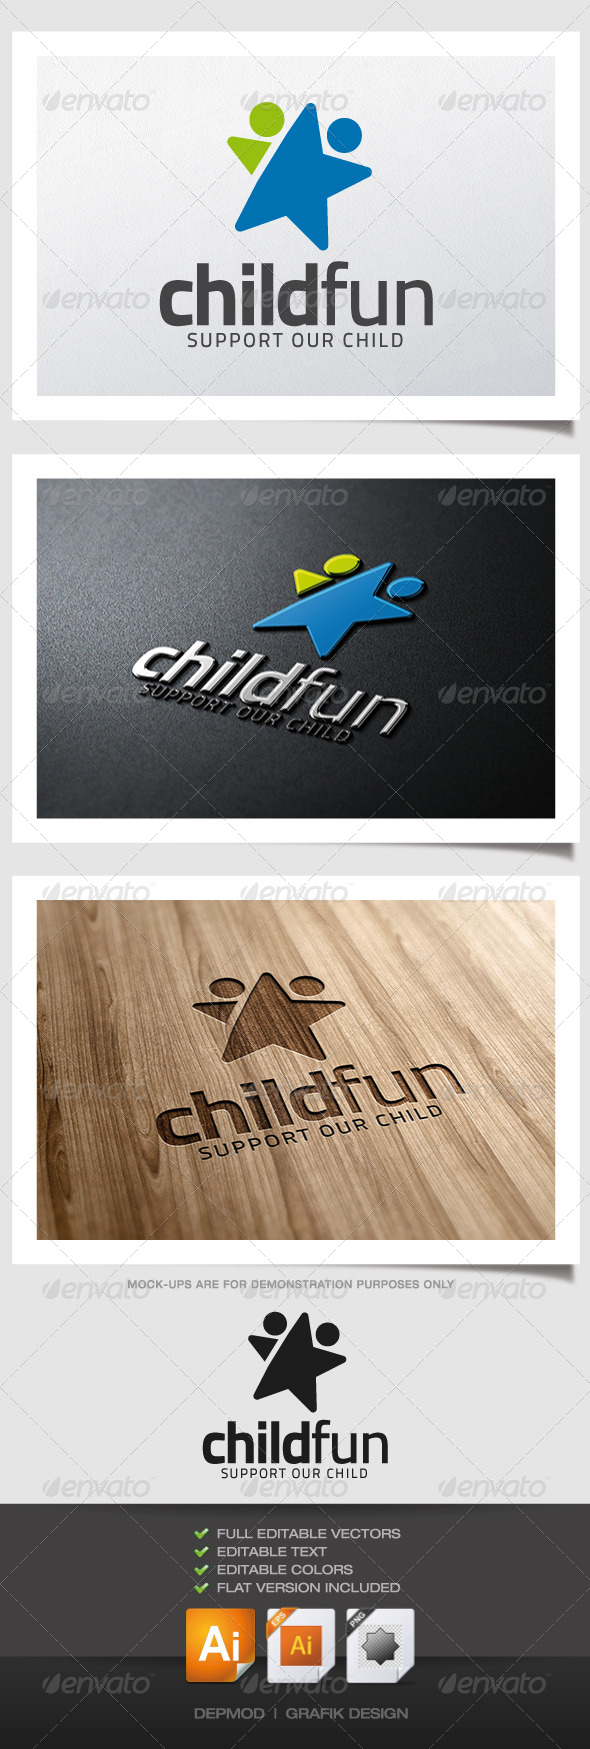 Child Fun Logo